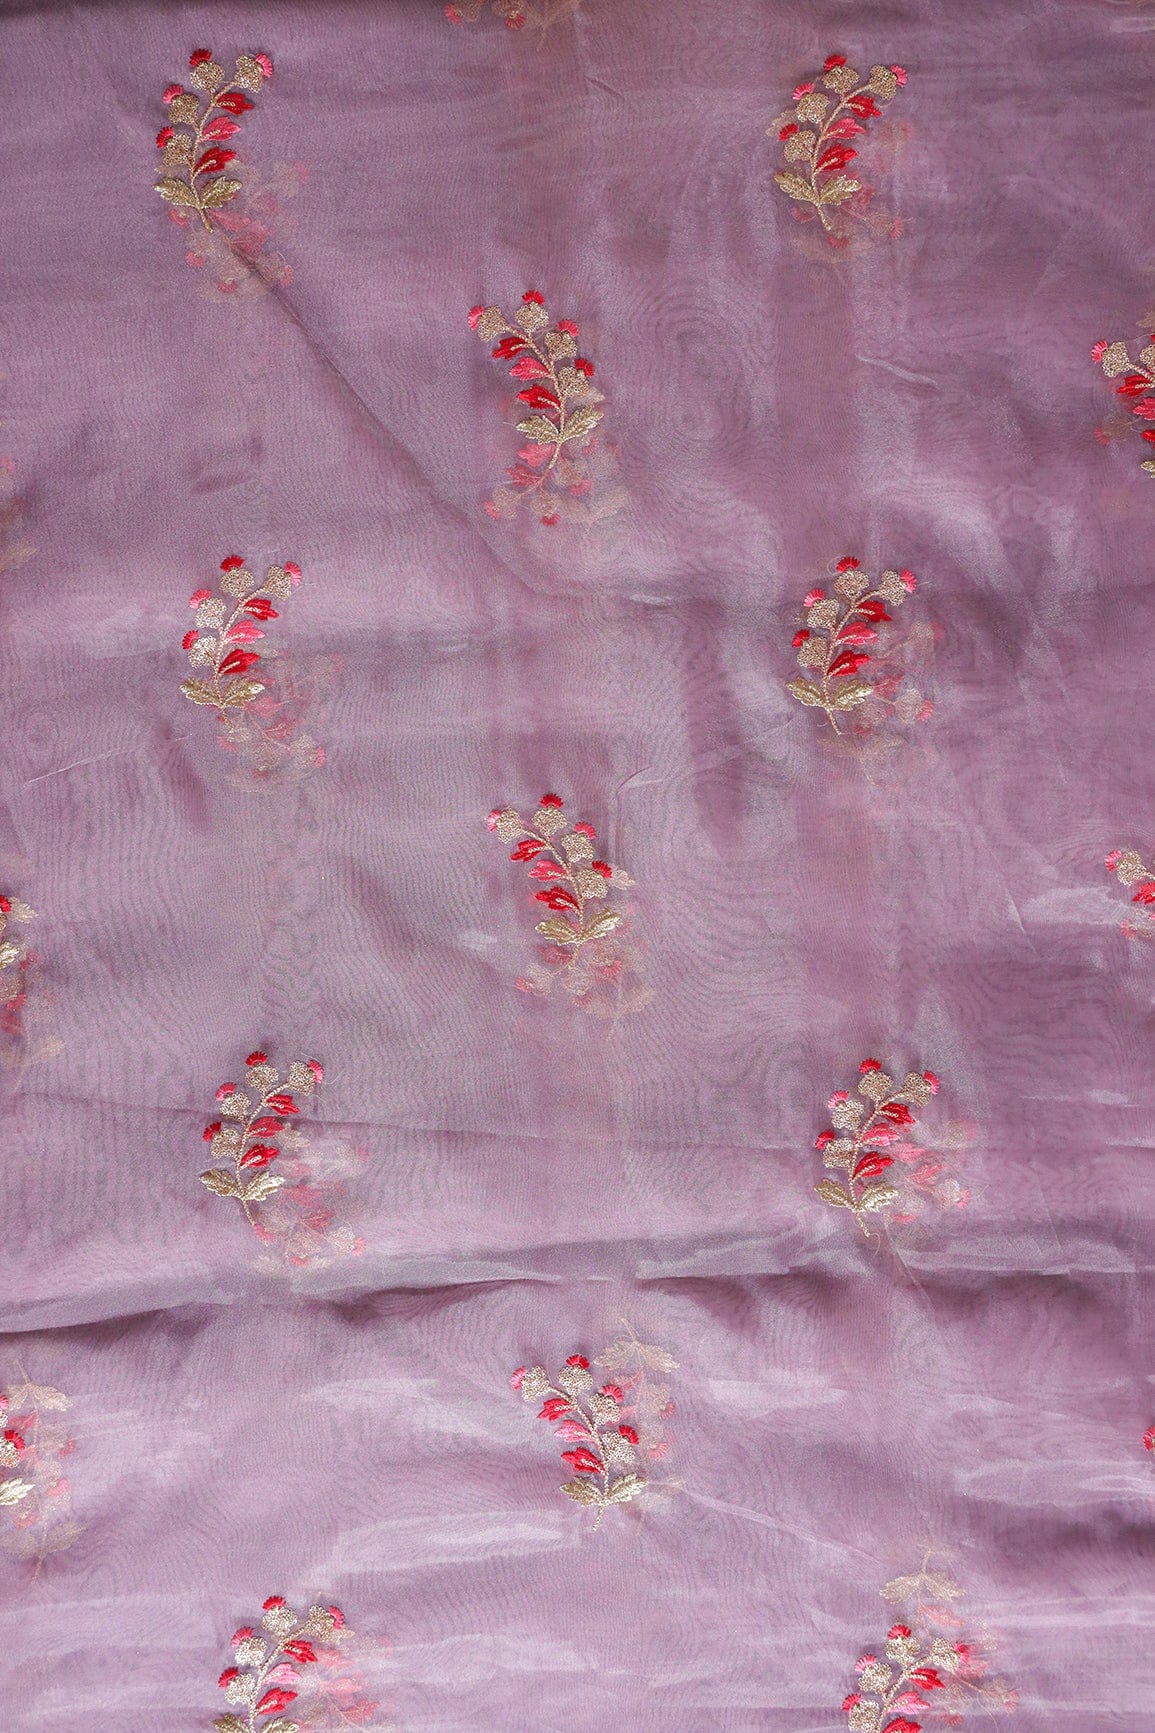 doeraa Embroidery Fabrics Beautiful Multi Color Leafy Embroidery Work On Lilac Purple Tissue Fabric